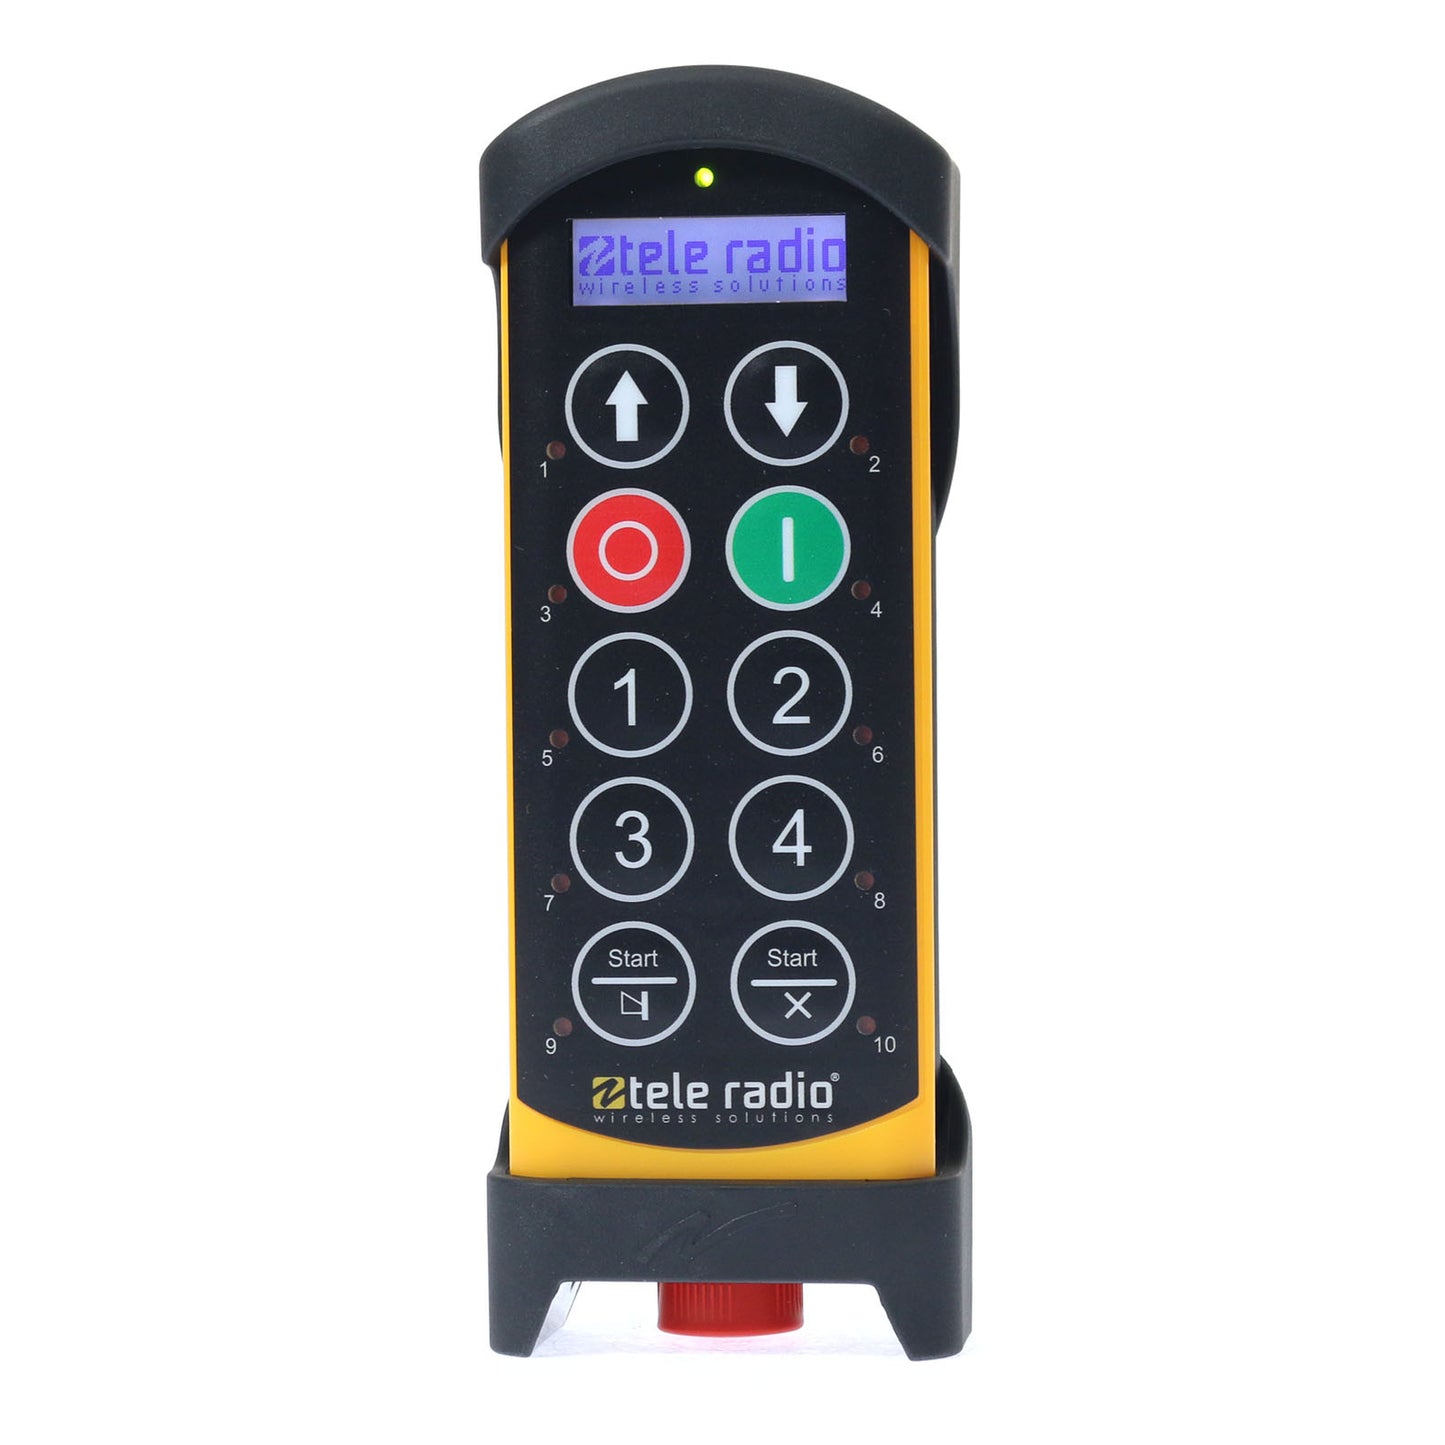 TeleRadio UAE dealer Tiger button type Radio remote control receiver for cranes and lifting equipment in Abu Dhabi, Dubai, Sharjah, Ras Al Khaimah, Umm Al Quwain UAE